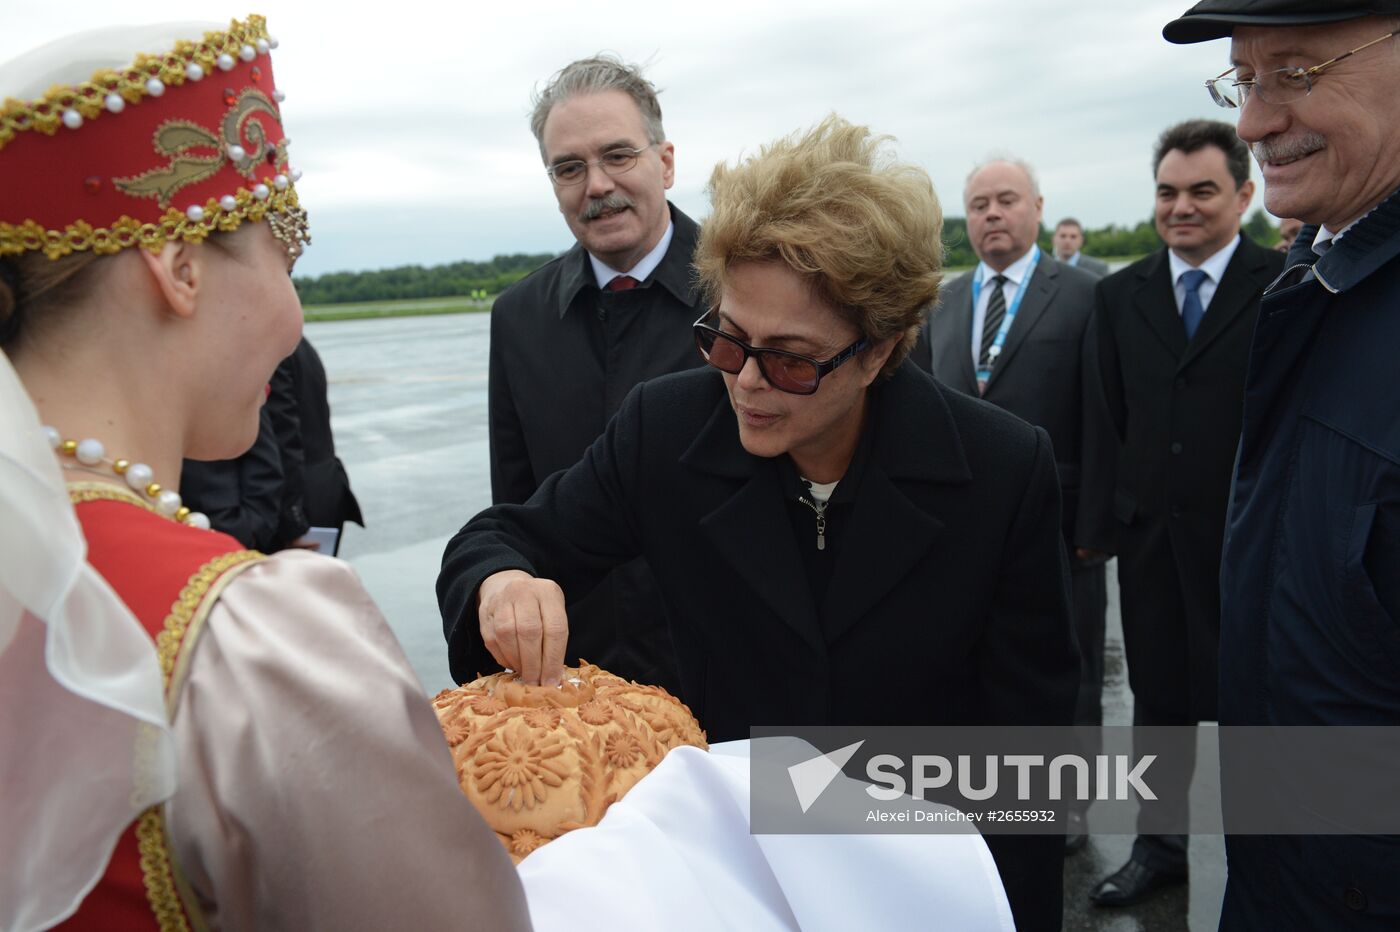 President of Brazil Dilma Rousseff arrives in Ufa